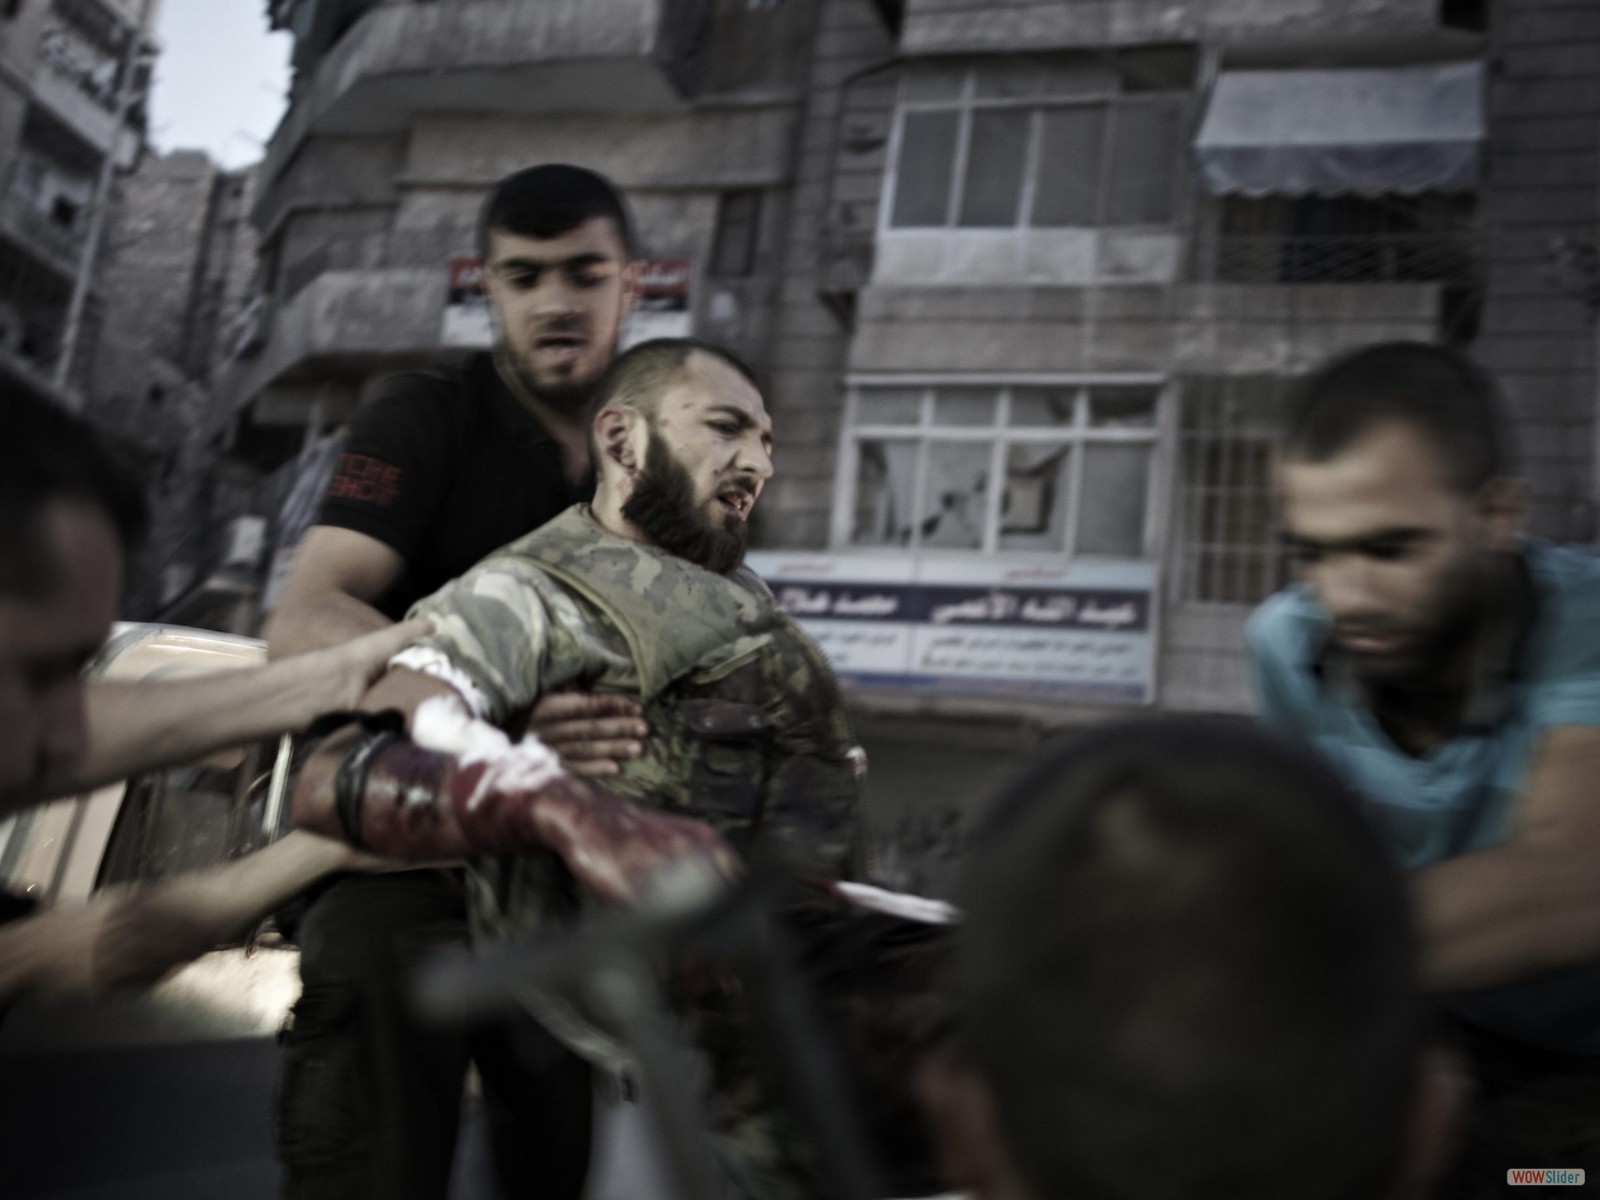 Un combattant de l’ASL, blessé sur un des fronts de la ville, est évacué en urgence vers un hôpital de campagne.
<br><i><b>

A Free Syrian Army fighter wounded on one of the frontlines in the city is rushed to a field hospital.
</b></i><br><i>© Sebastiano Tomada - Sipa Press - 2013</i>
